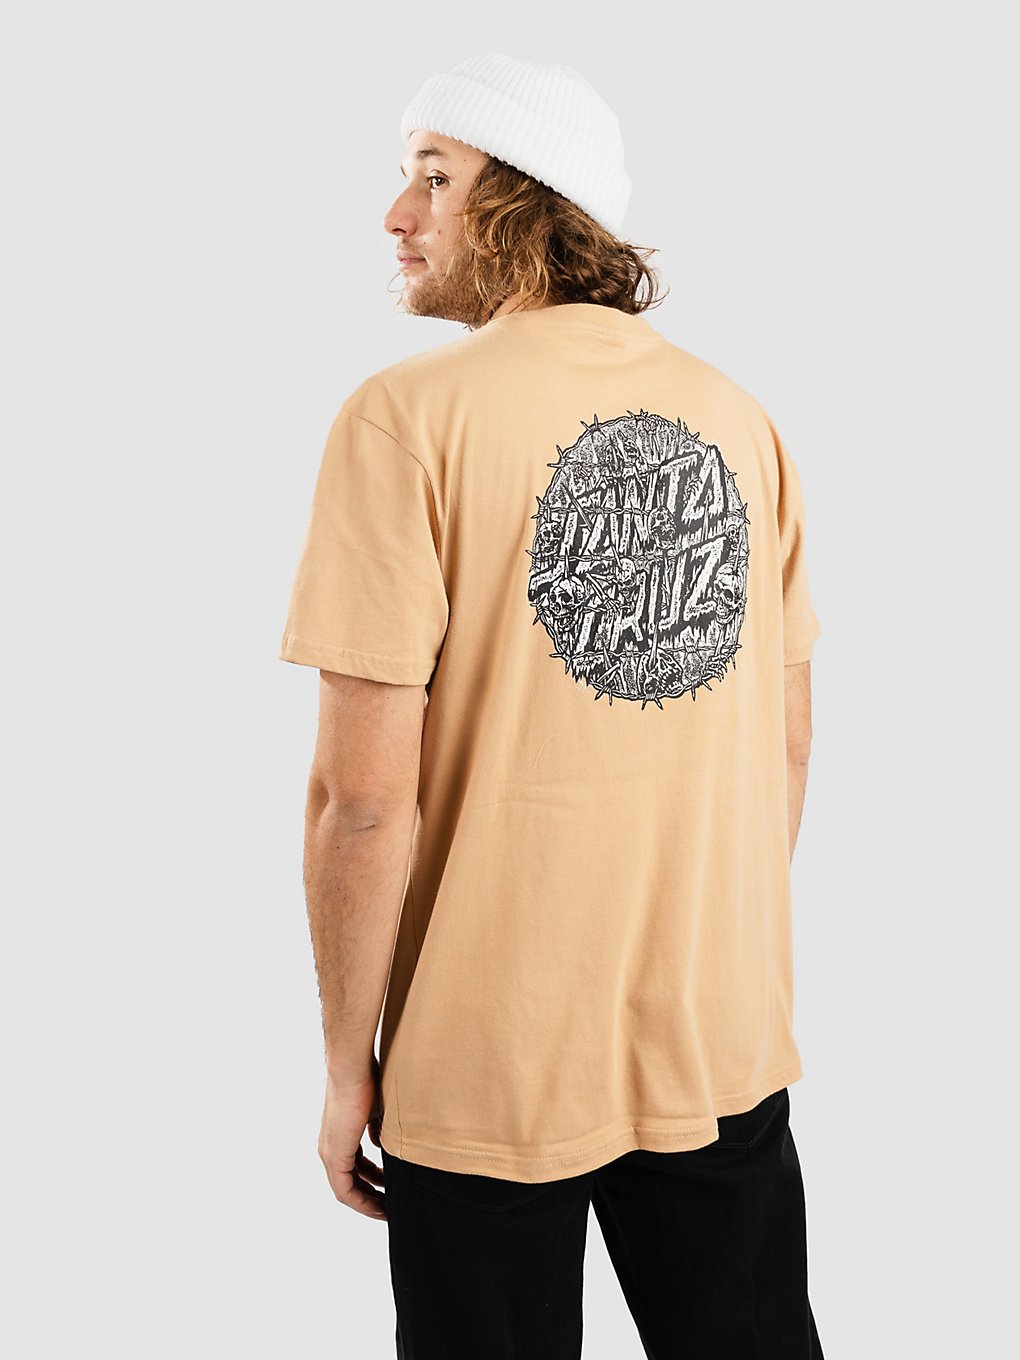 Santa Cruz Abyss Dot T-Shirt sandstone kaufen